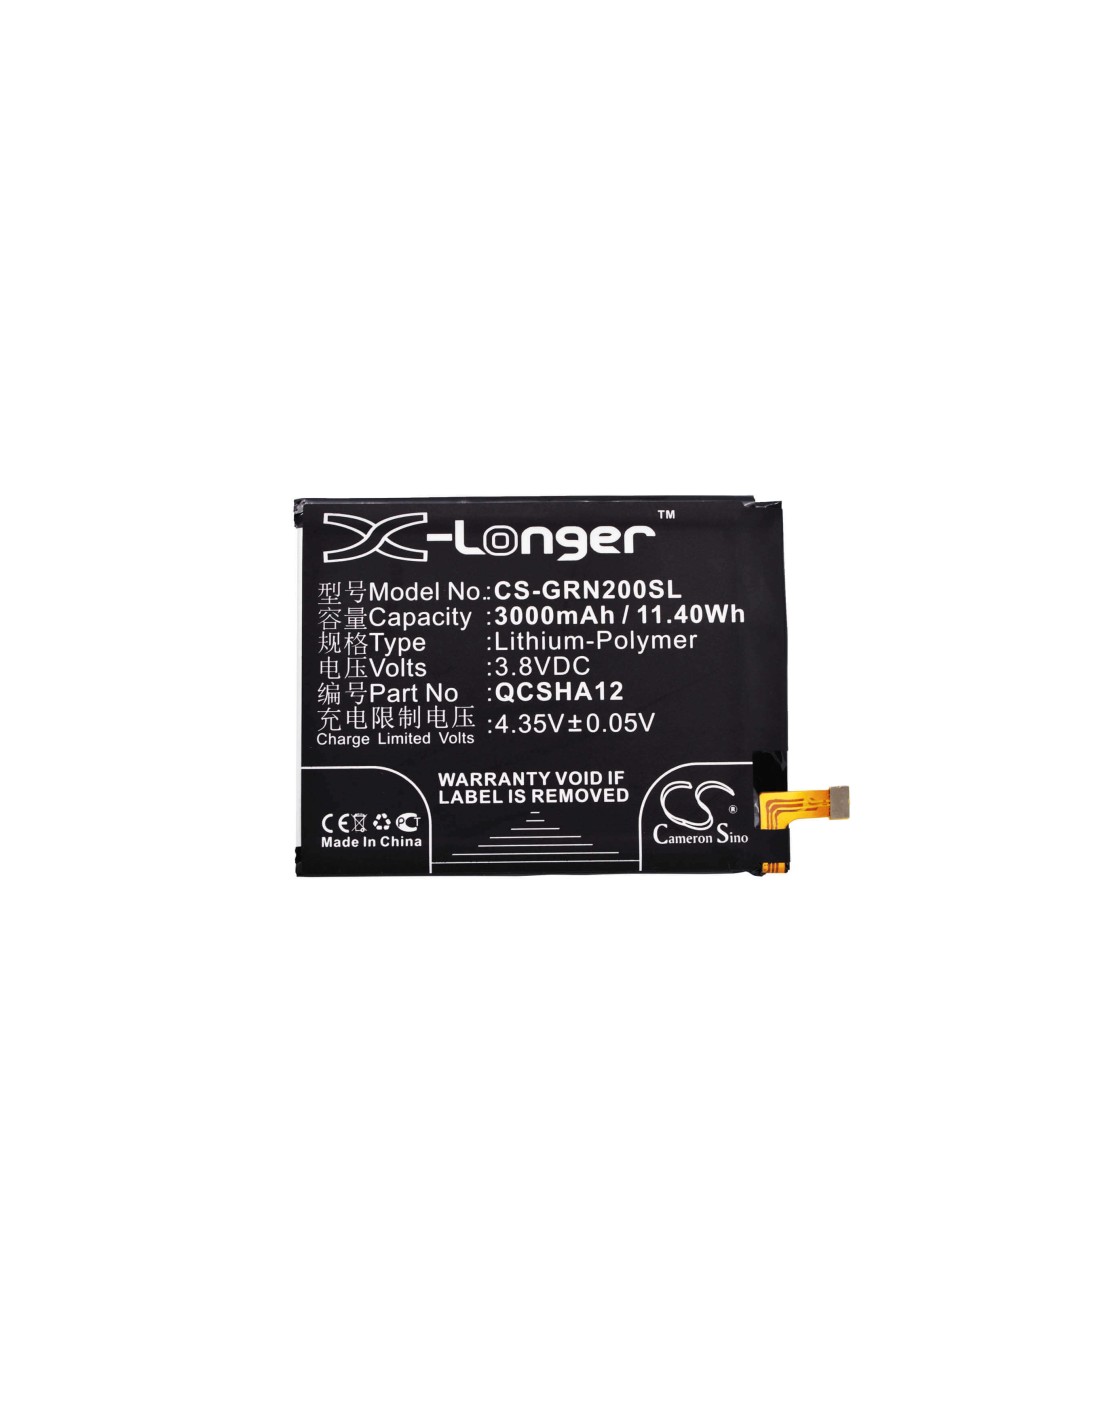 Battery for Green Orange N2, JL610 3.8V, 3000mAh - 11.40Wh